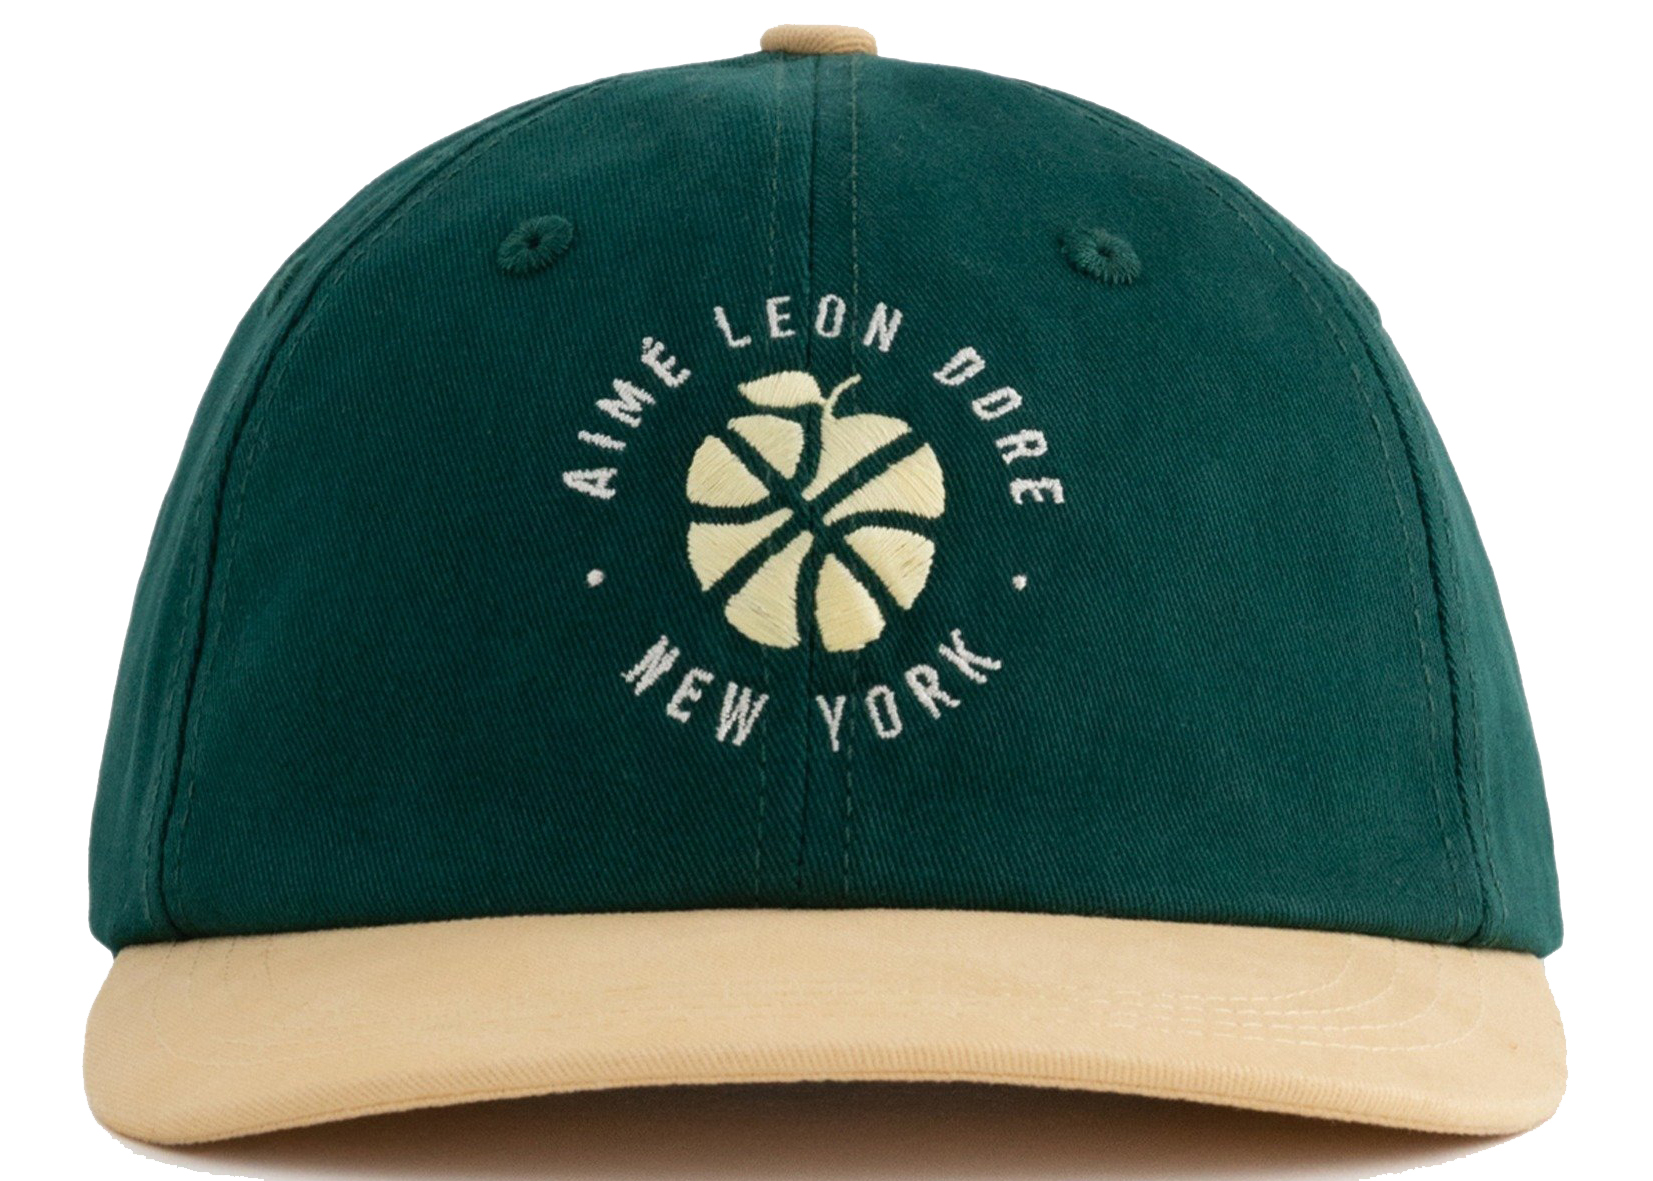 Aime Leon Dore x New Balance Colorblock Hat Green - SS21 - US